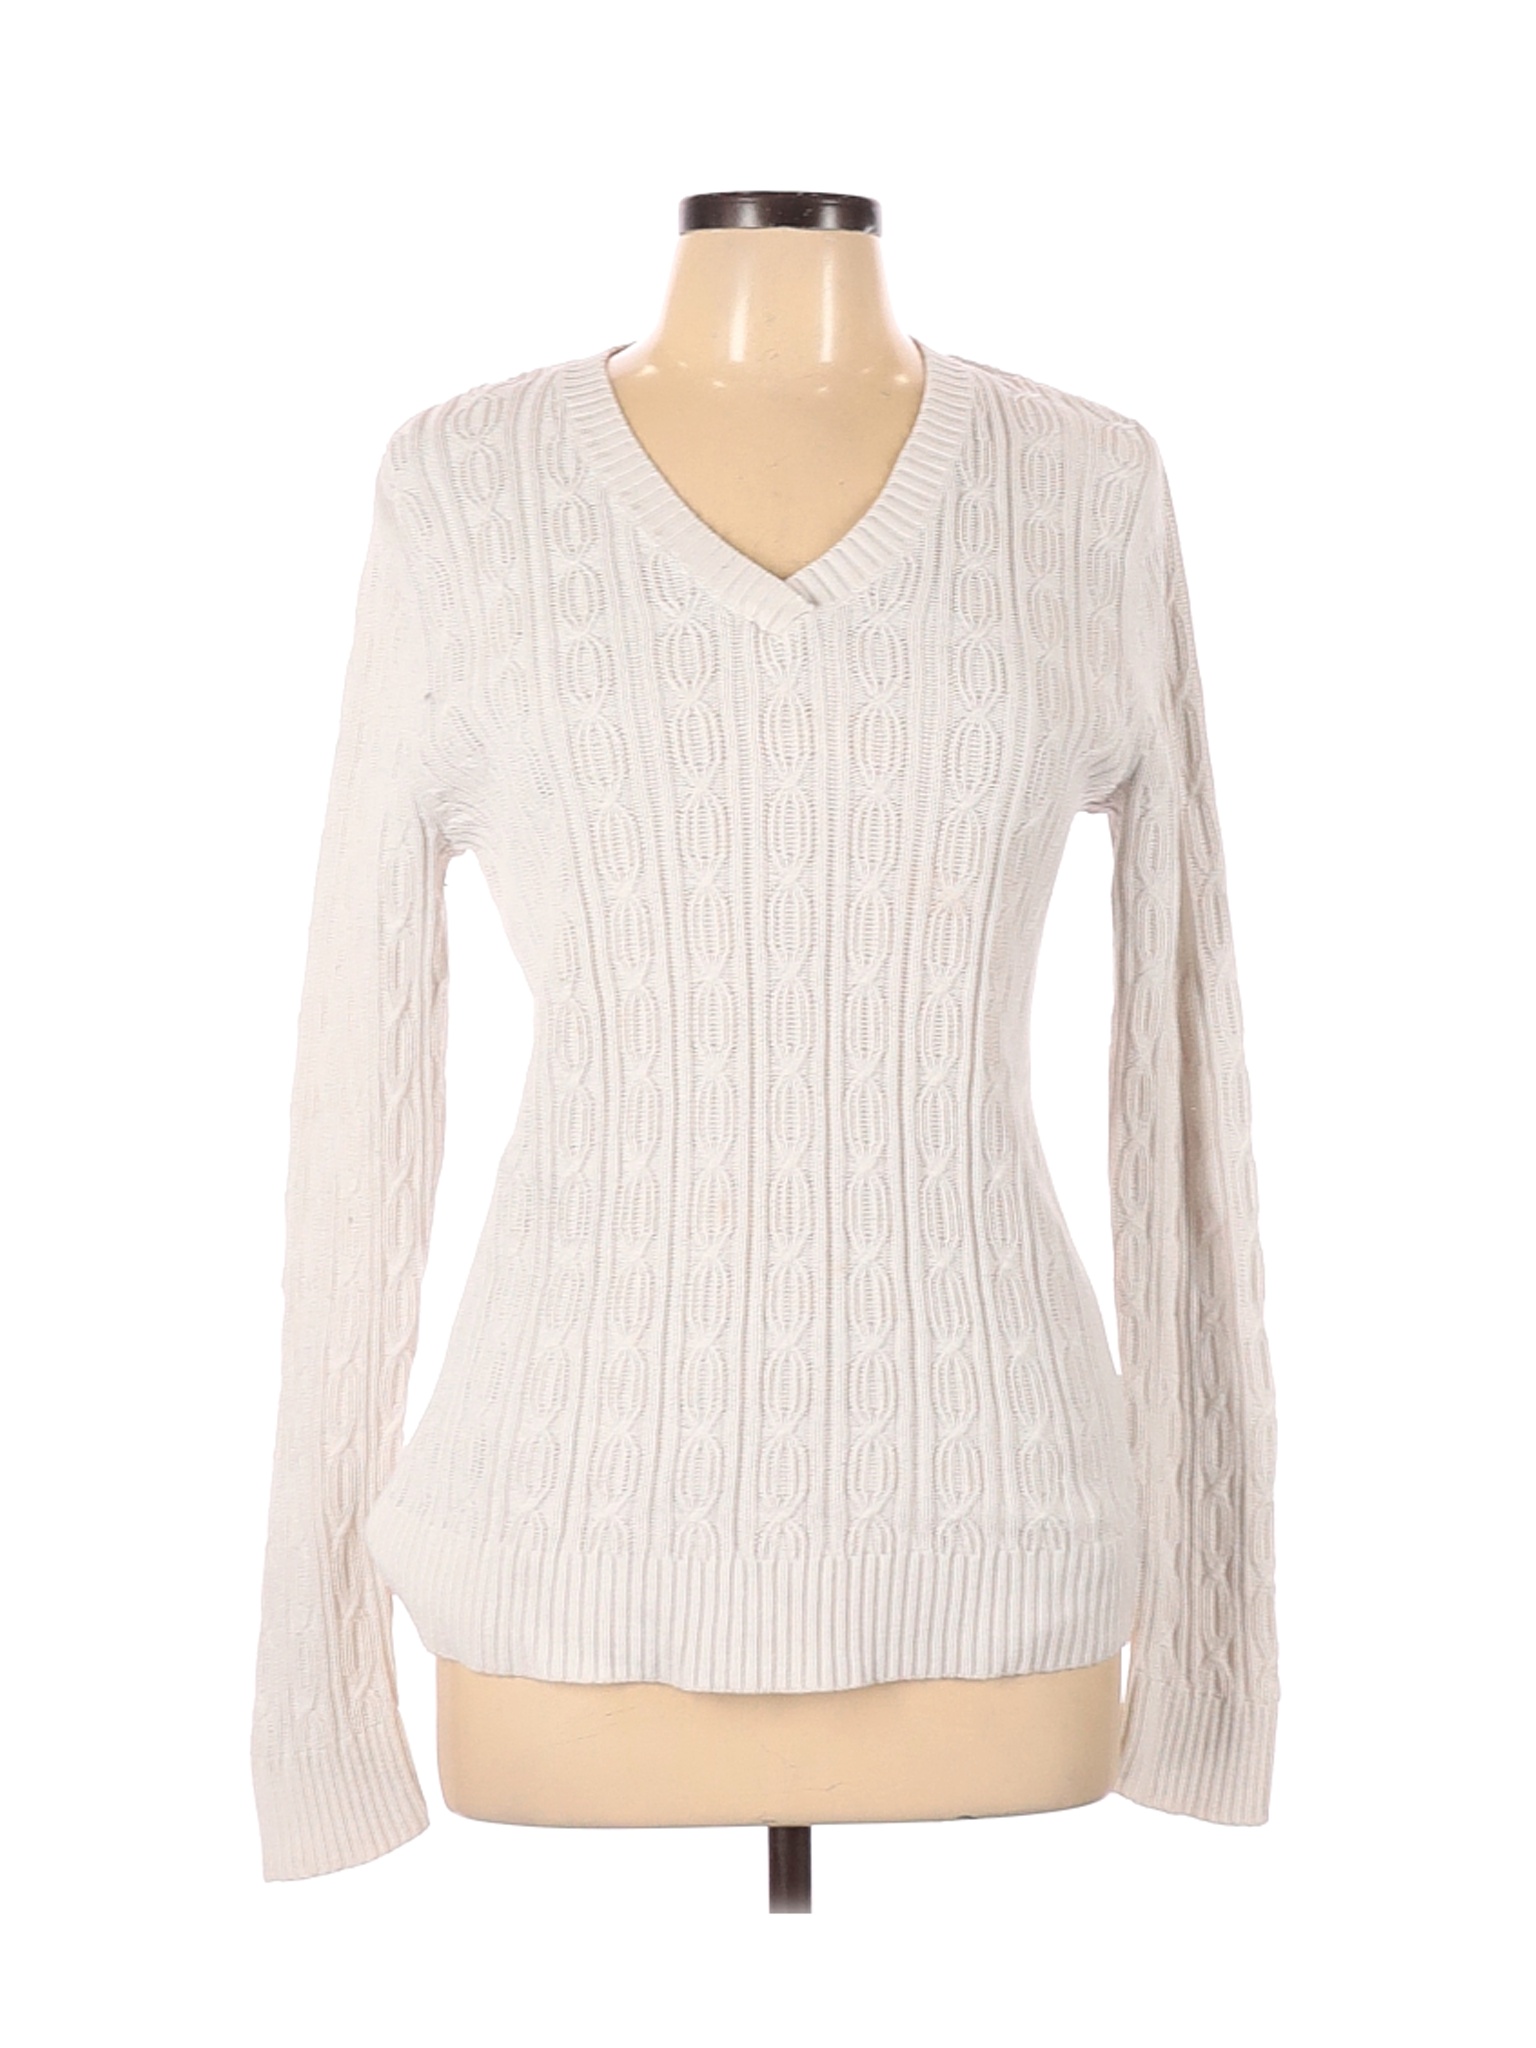 Croft & Barrow Women White Pullover Sweater L | eBay